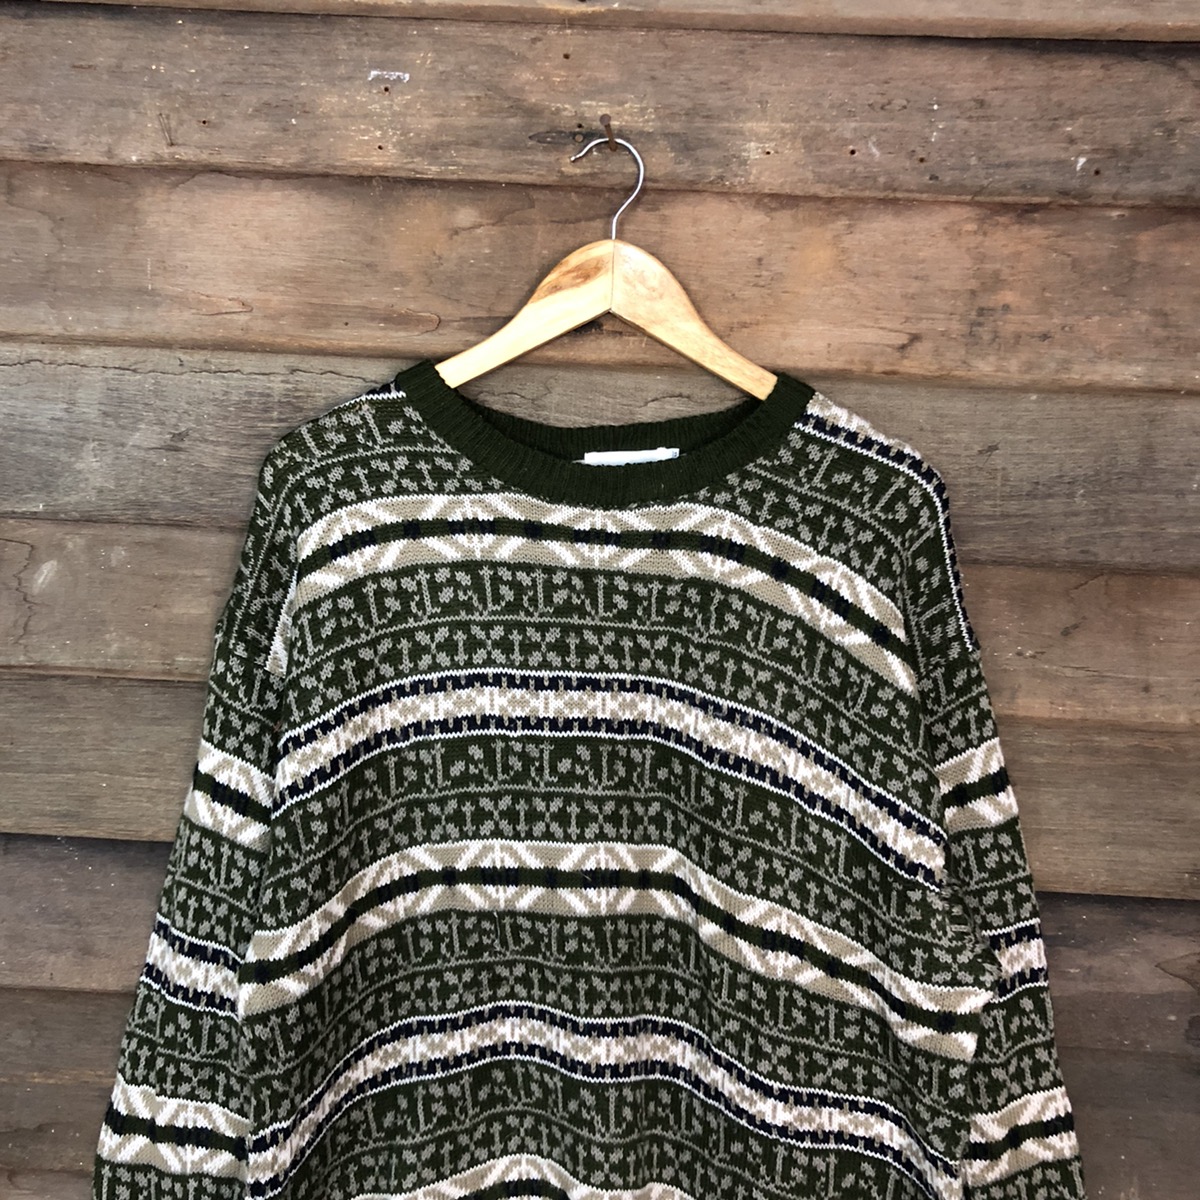 Homespun Knitwear - Yes Pleeze Patterned Knit Sweater - 9